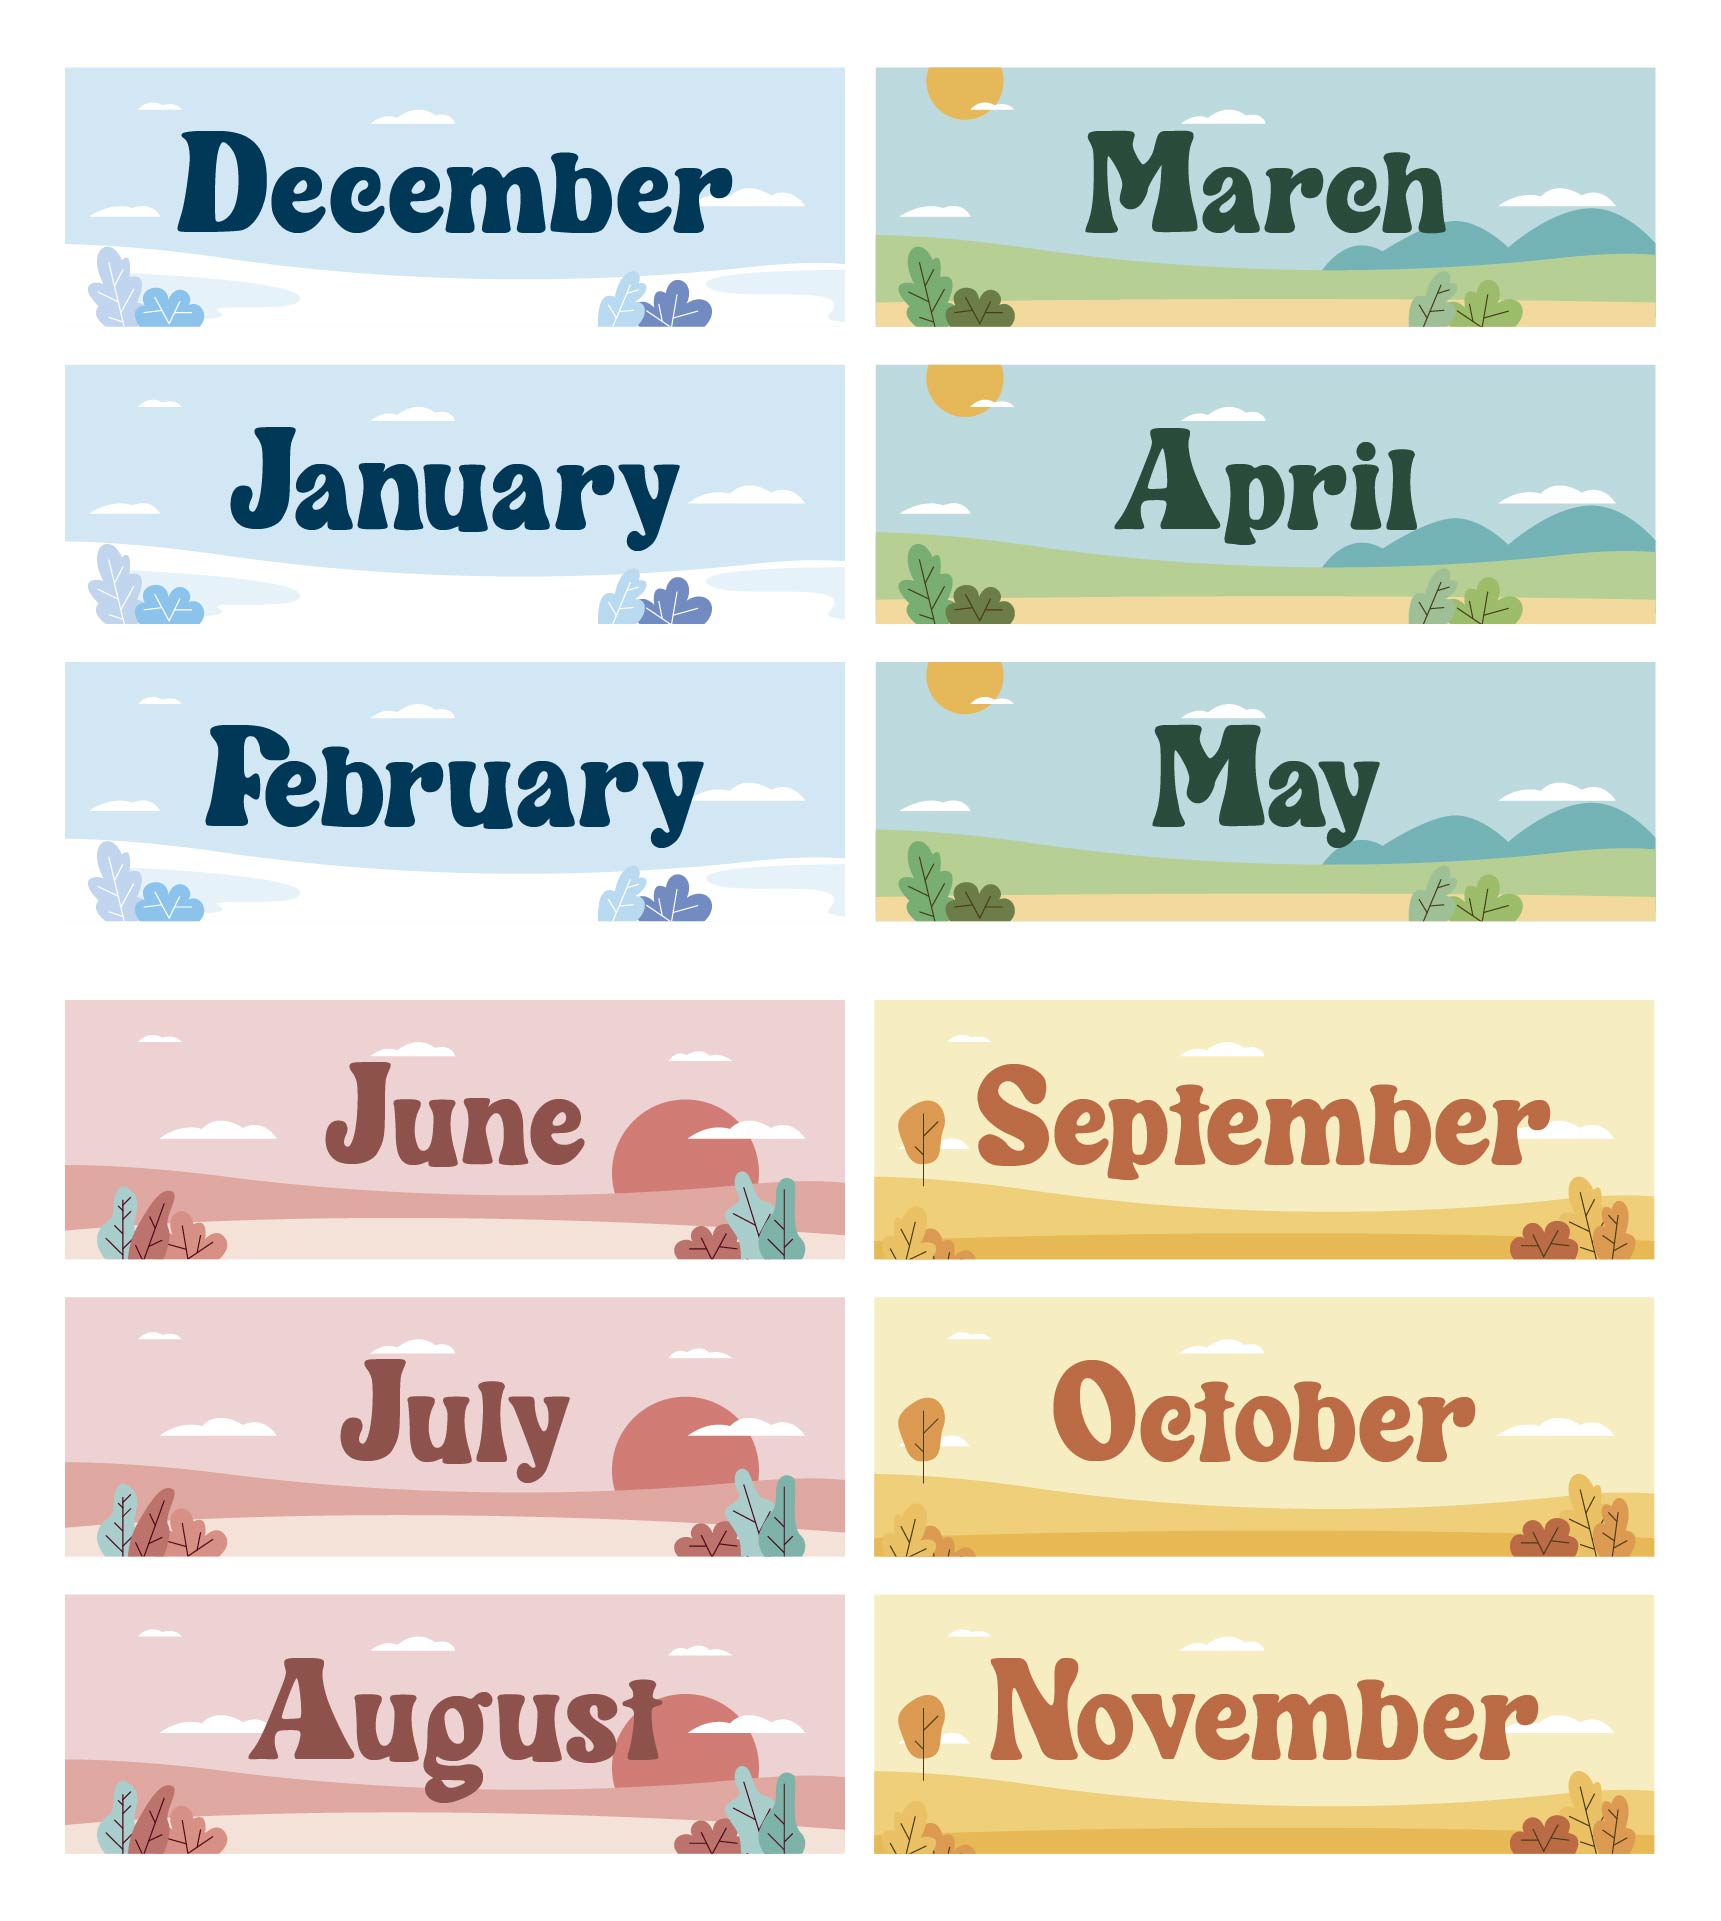 Months in Each Season